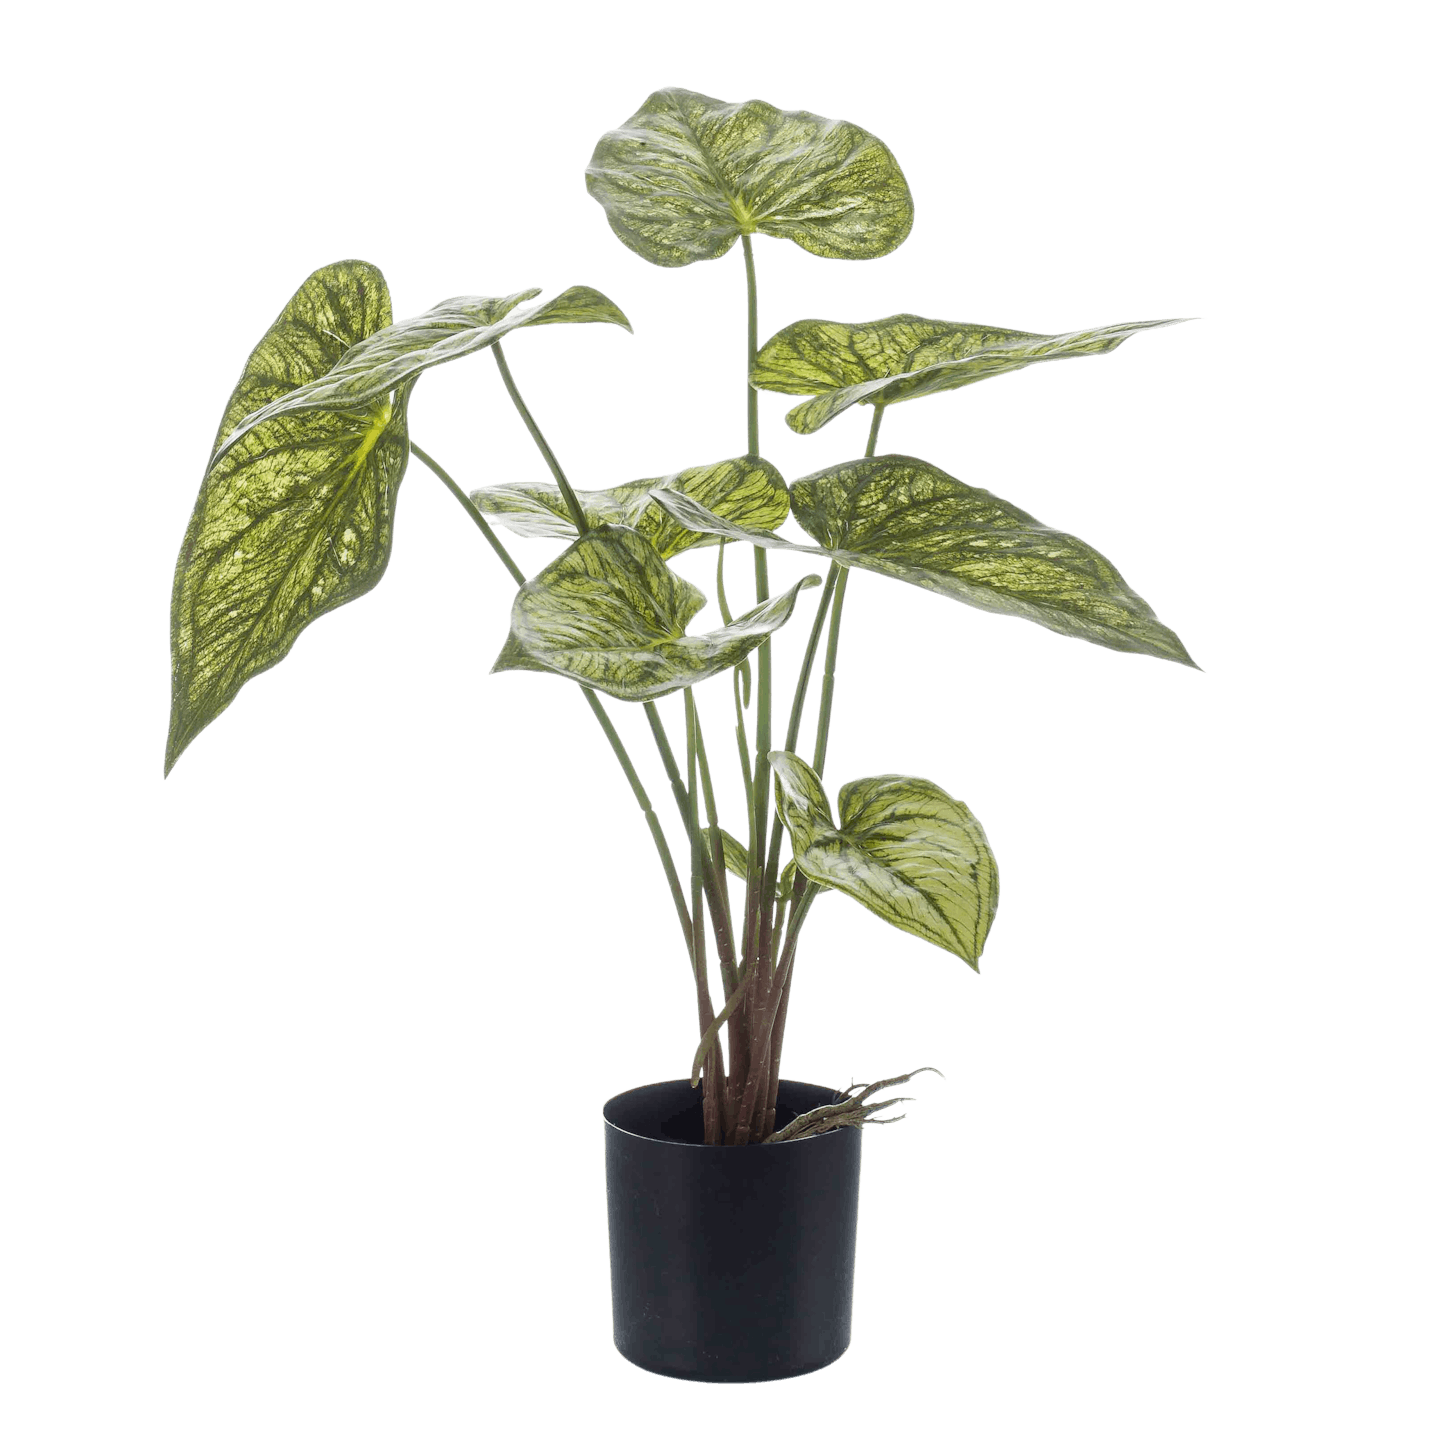 Artificial caladium - green/ yellow leaf